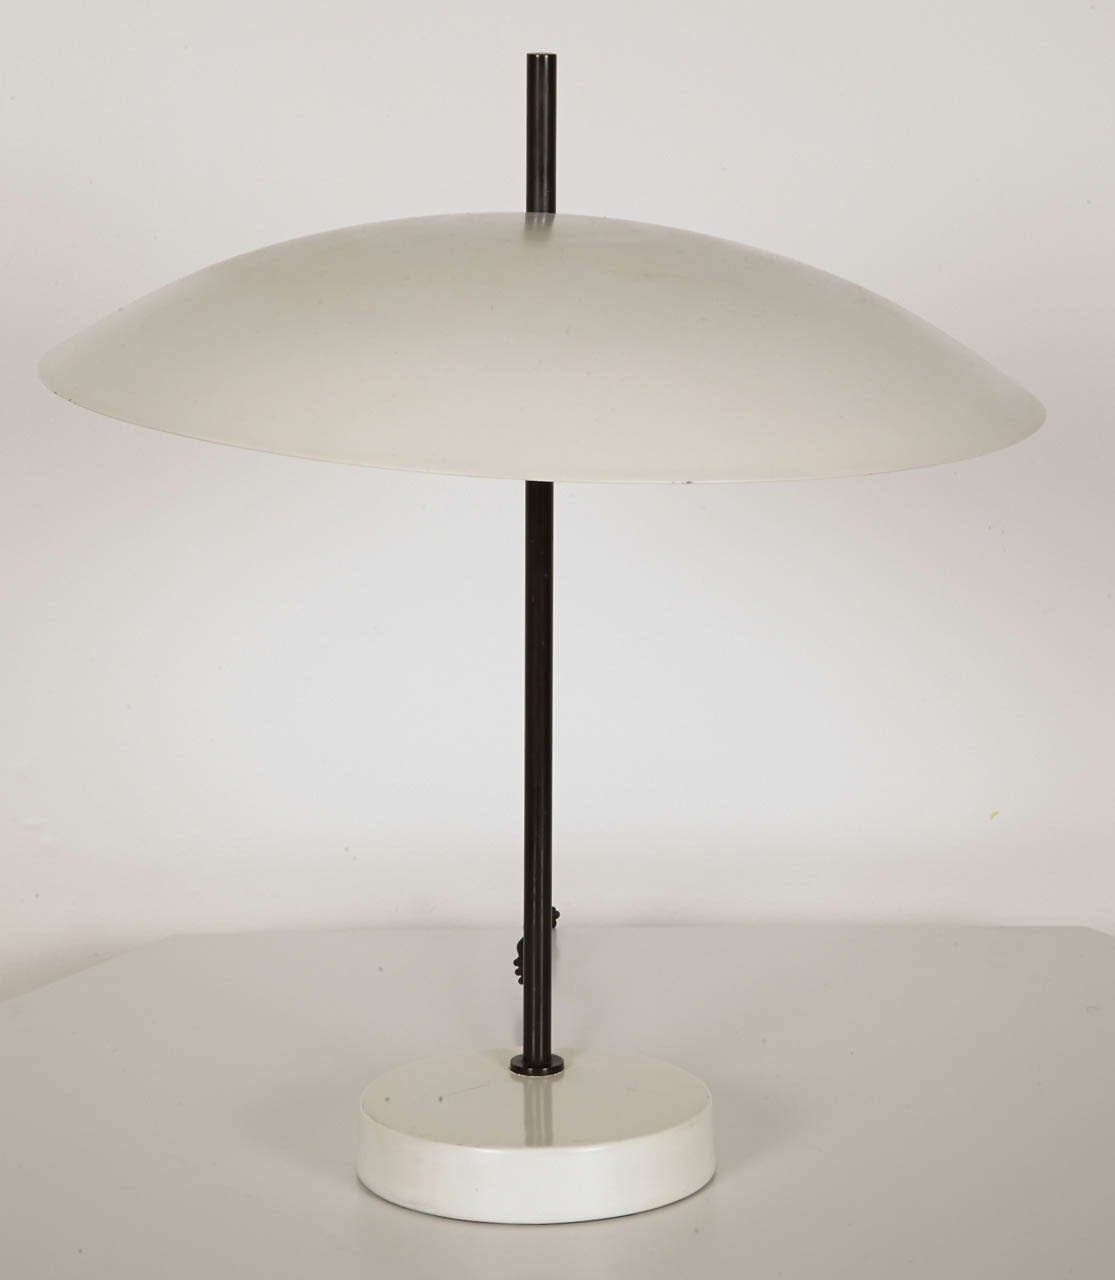 Lamp 1013 - Pierre Disderot (1920-1990) - Pierre Disderot edition - 1955